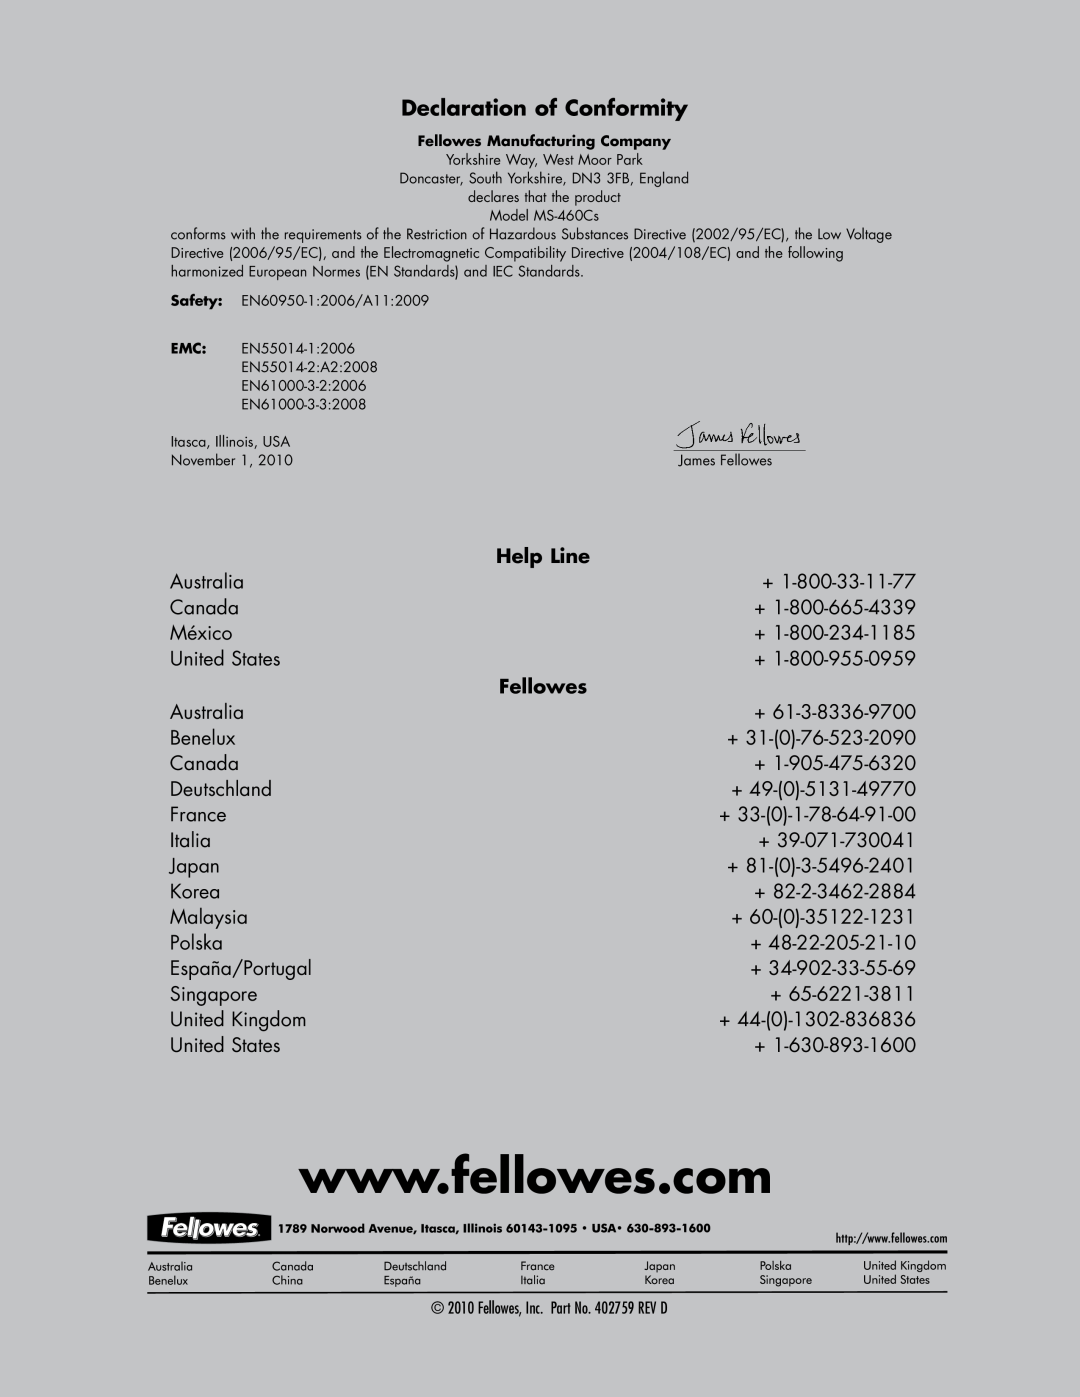 Fellowes Model MS-460Cs manual Help Line, Fellowes, Declaration of Conformity 